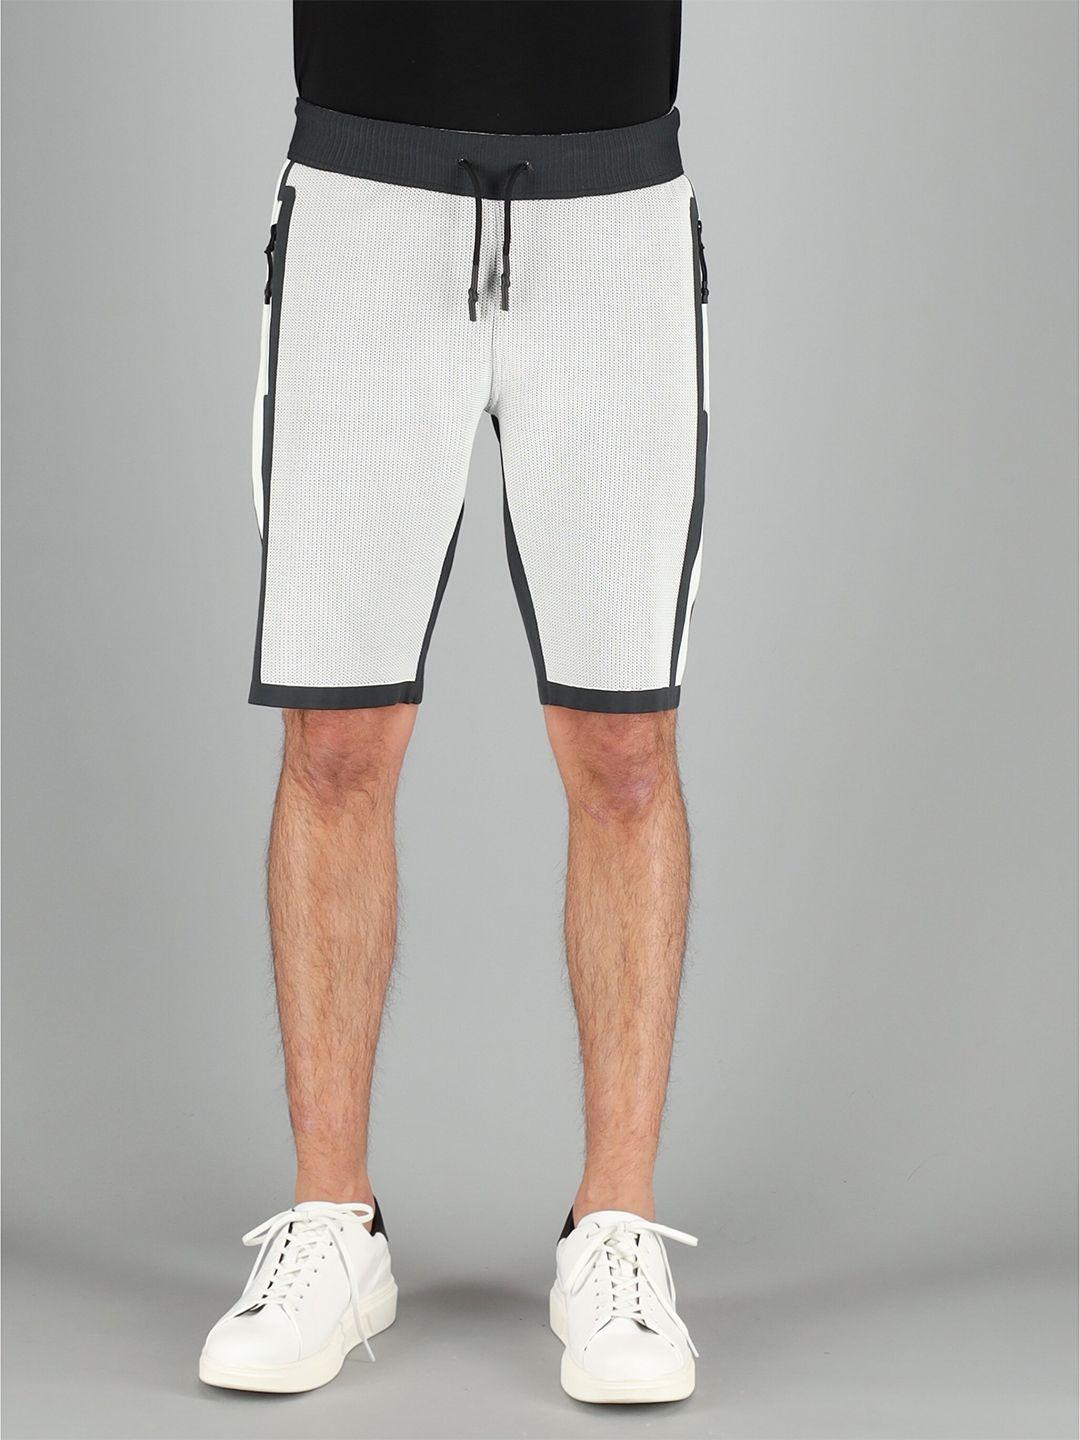 freesoul men white & charcoal grey colourblocked shorts